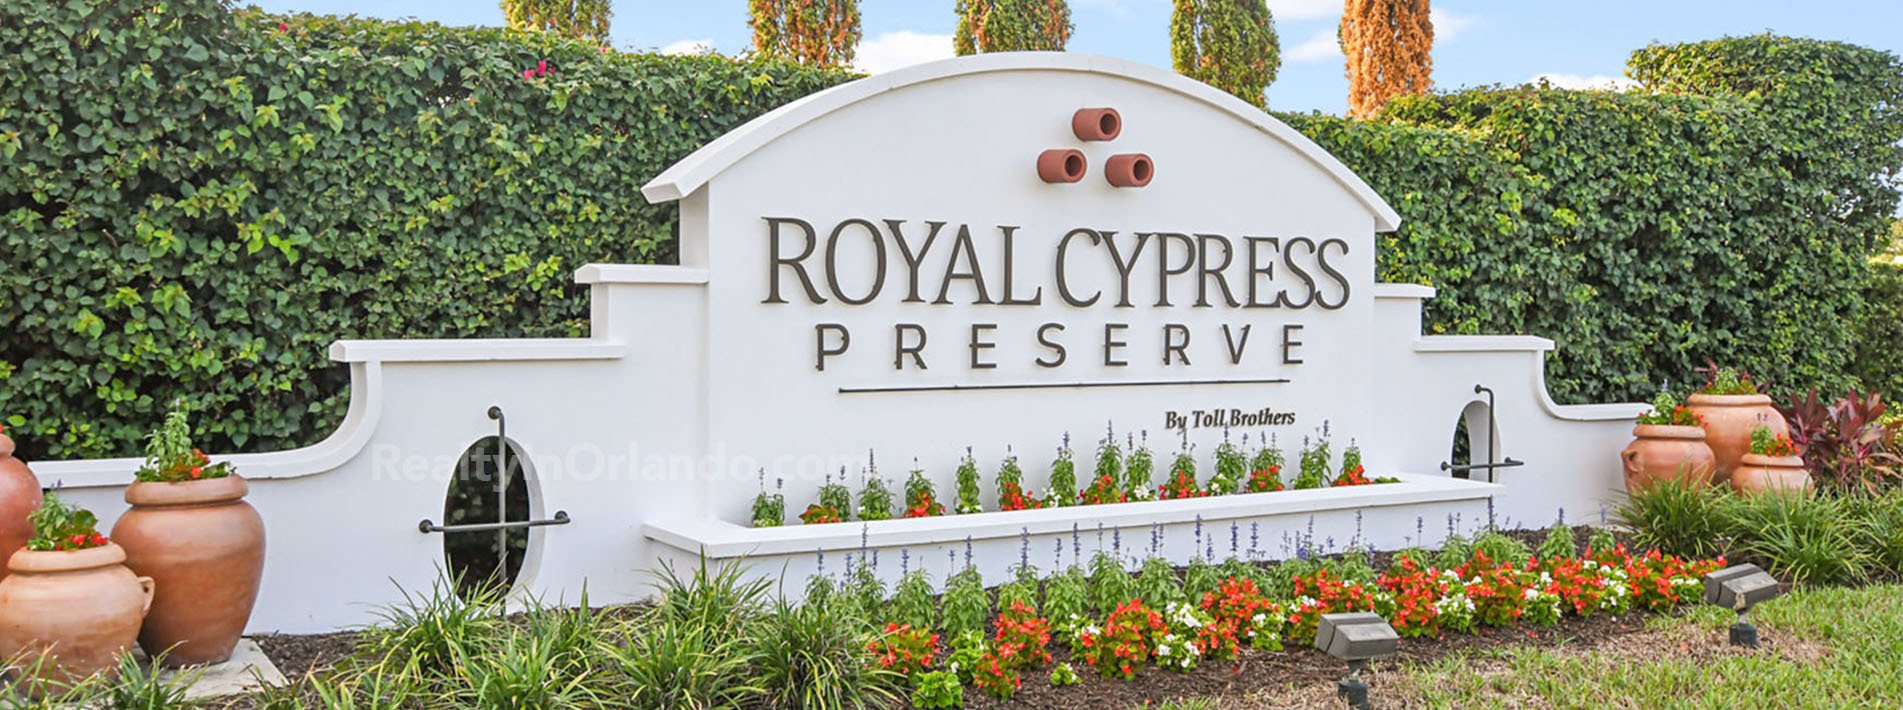 Royal Cypress Preserve Orlando